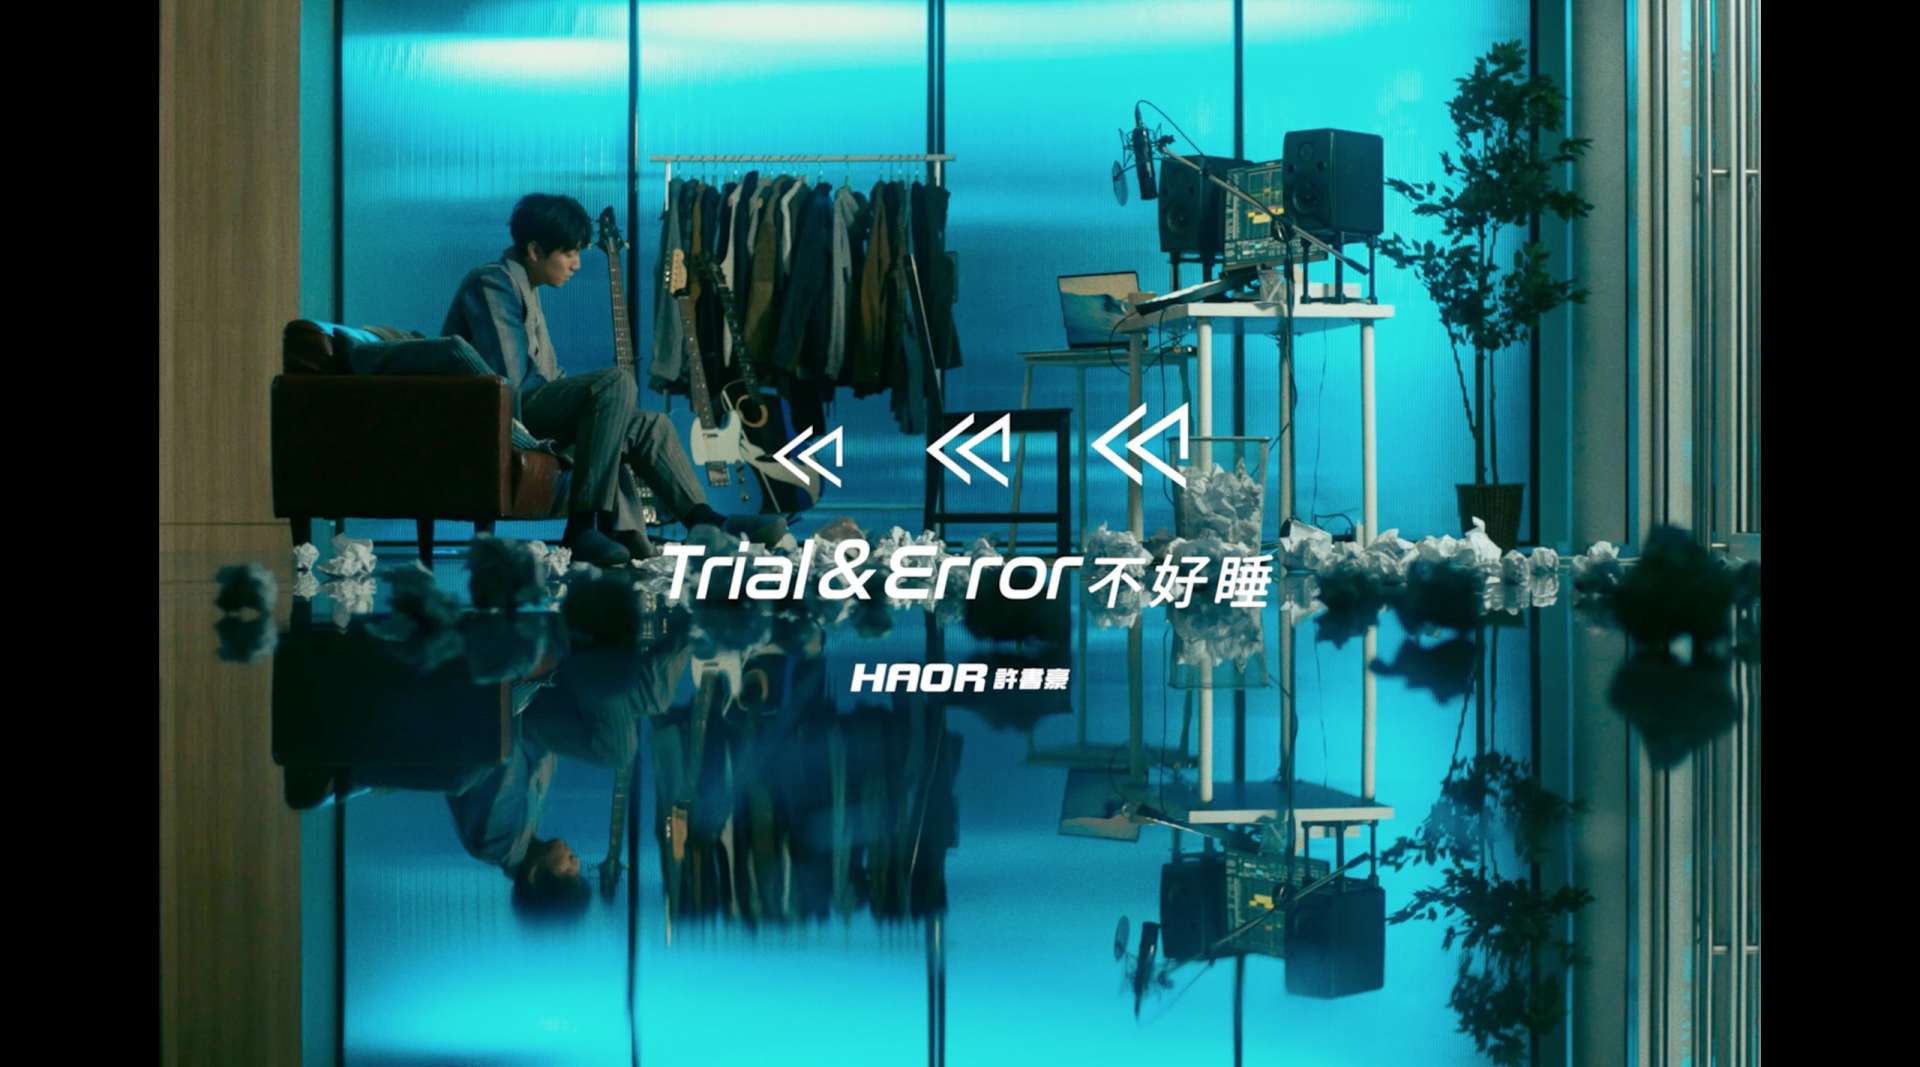 Haor許書豪【 Trial & Error 不好睡 】MV